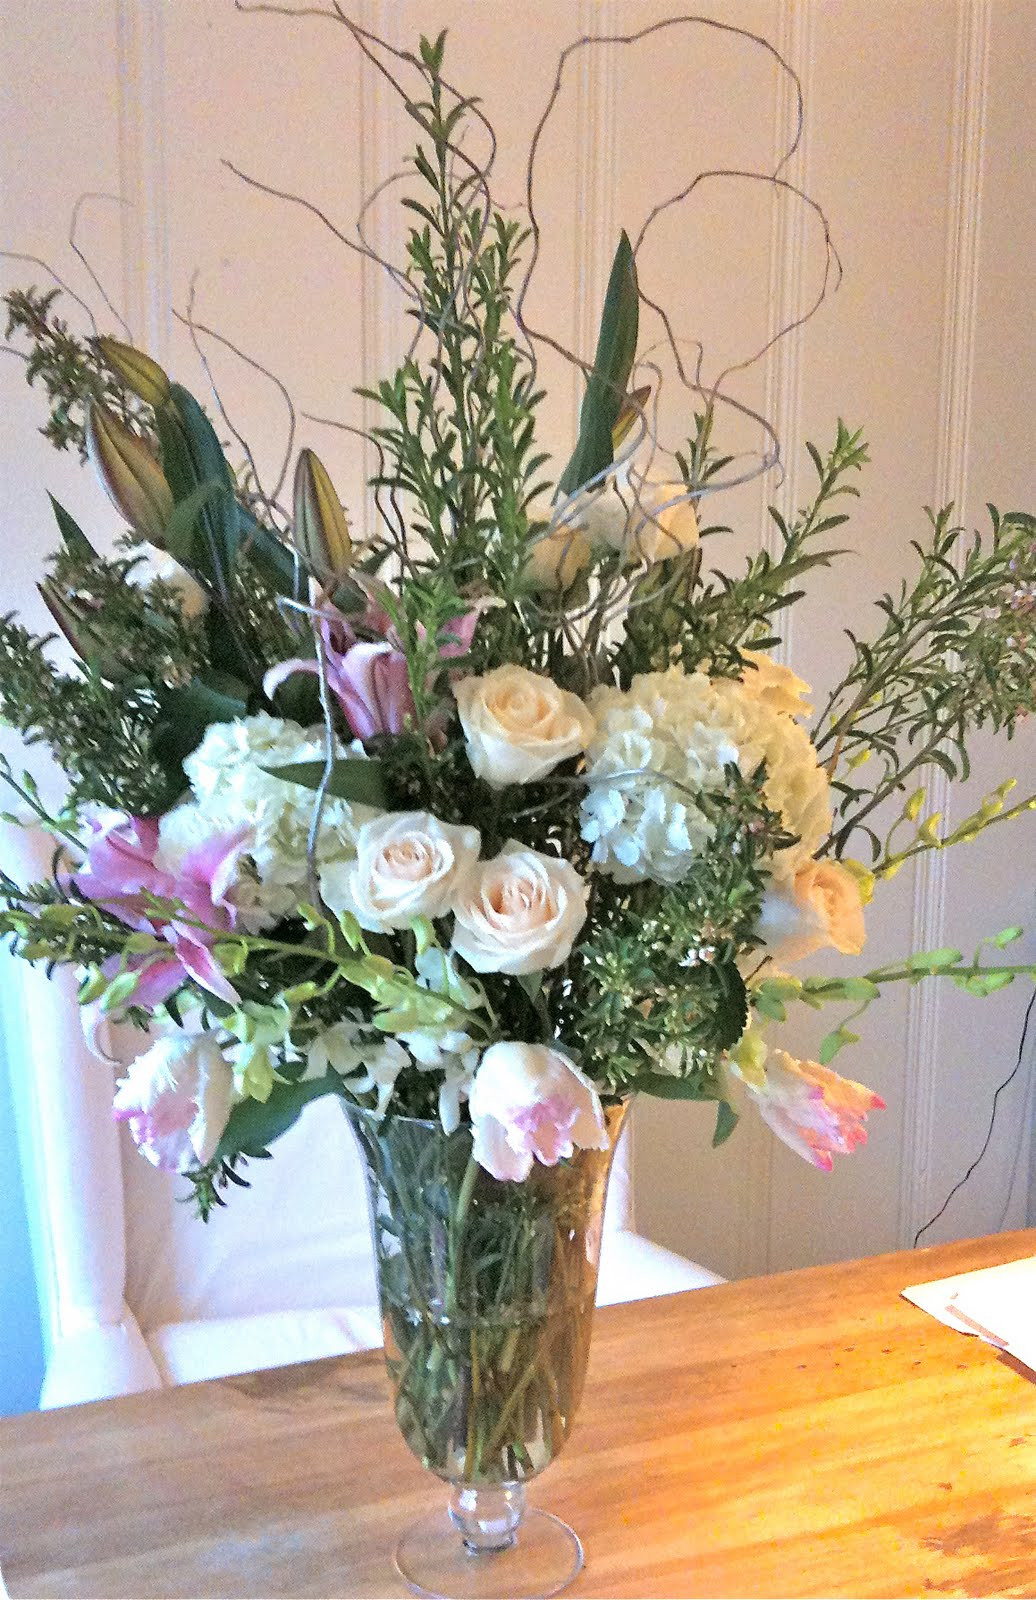 Best ideas about DIY Flower Arrangements
. Save or Pin Jenny Steffens Hobick DIY Now.